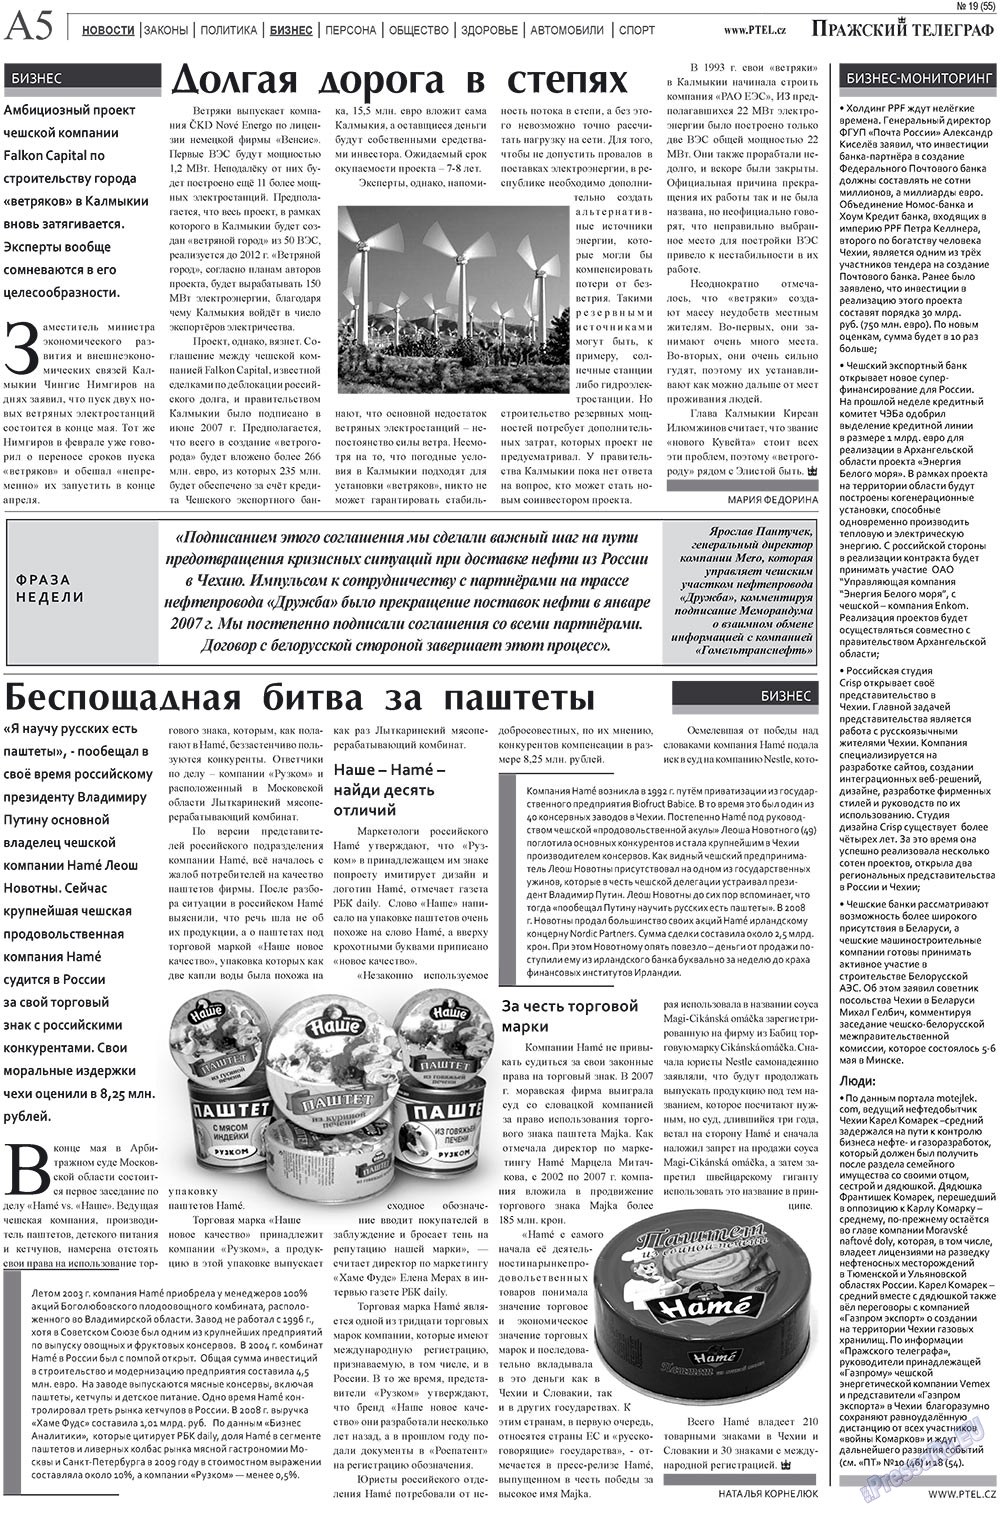 Пражский телеграф, газета. 2010 №19 стр.5